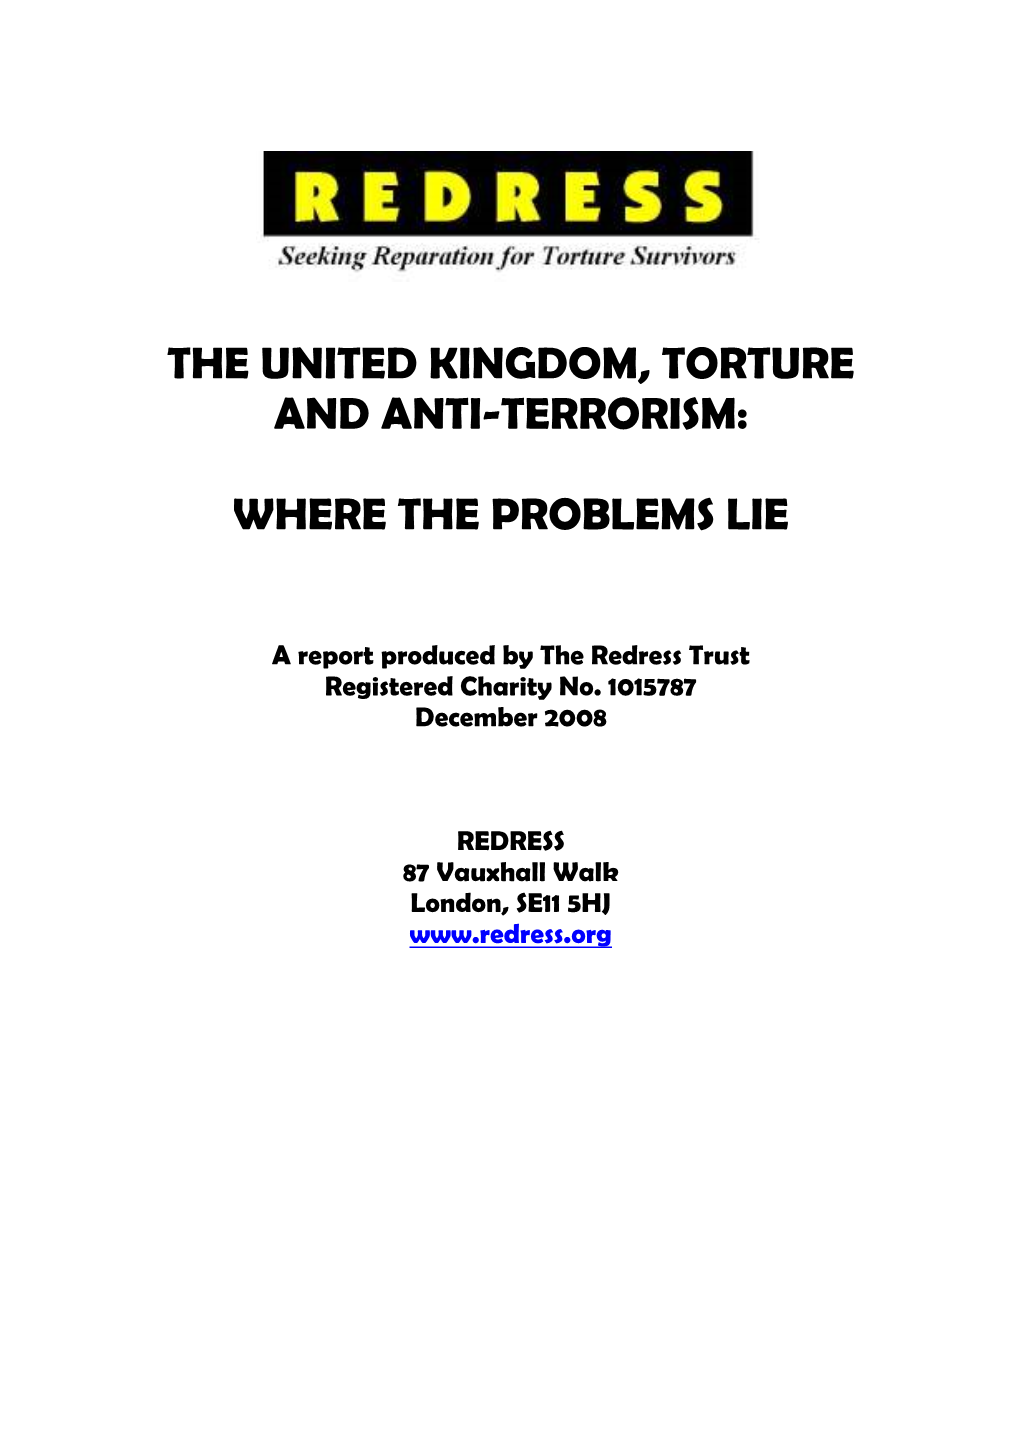 The United Kingdom, Torture and Anti-Terrorism